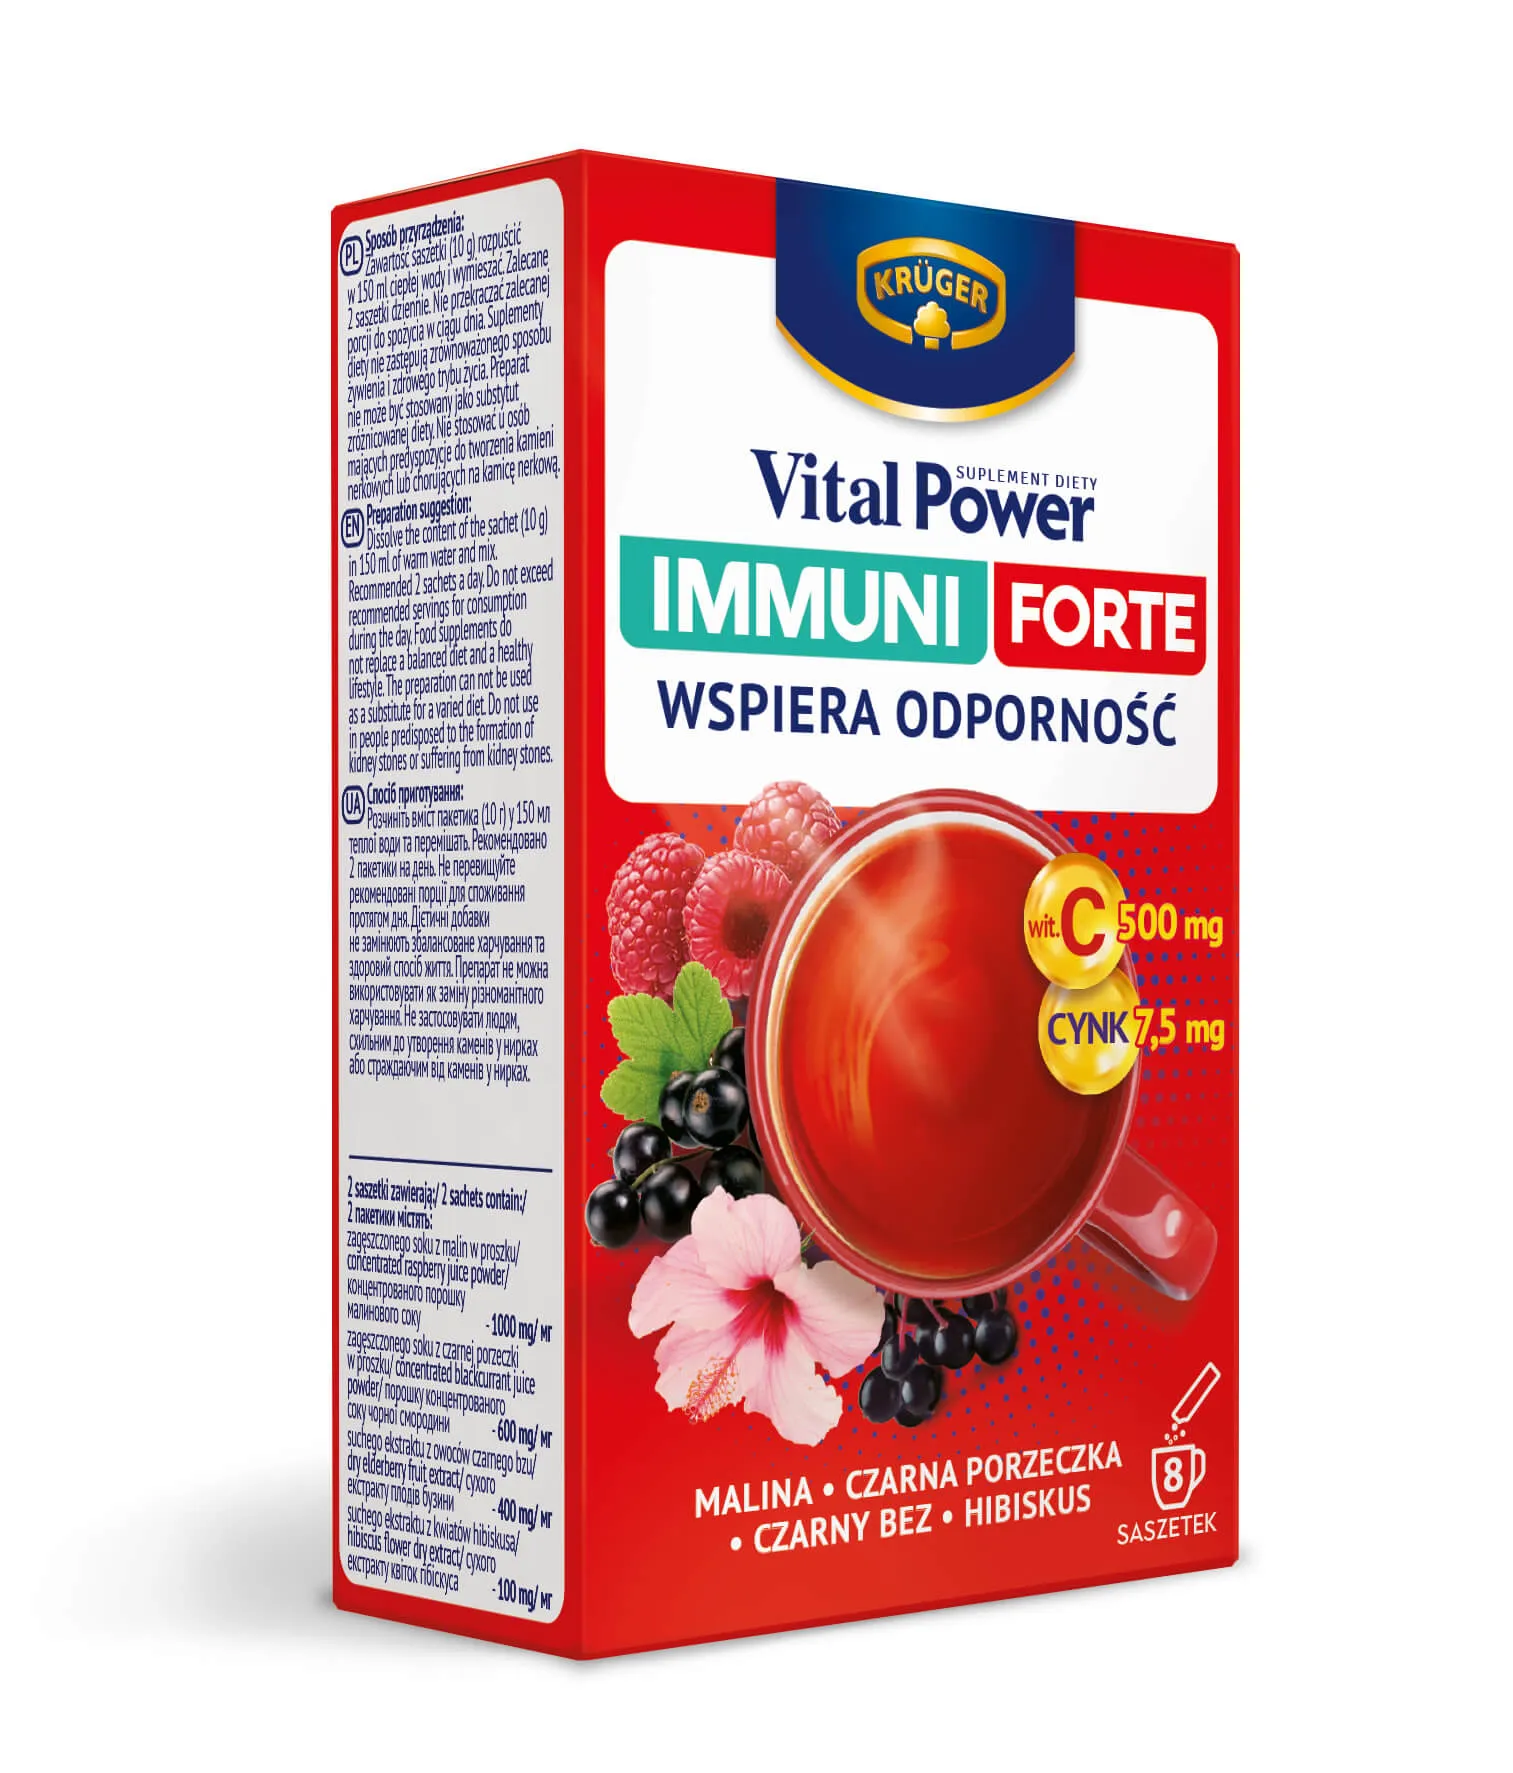 Krüger Vital Power Immuni Forte, malina czarna porzeczka, czarny bez 8 saszetek 